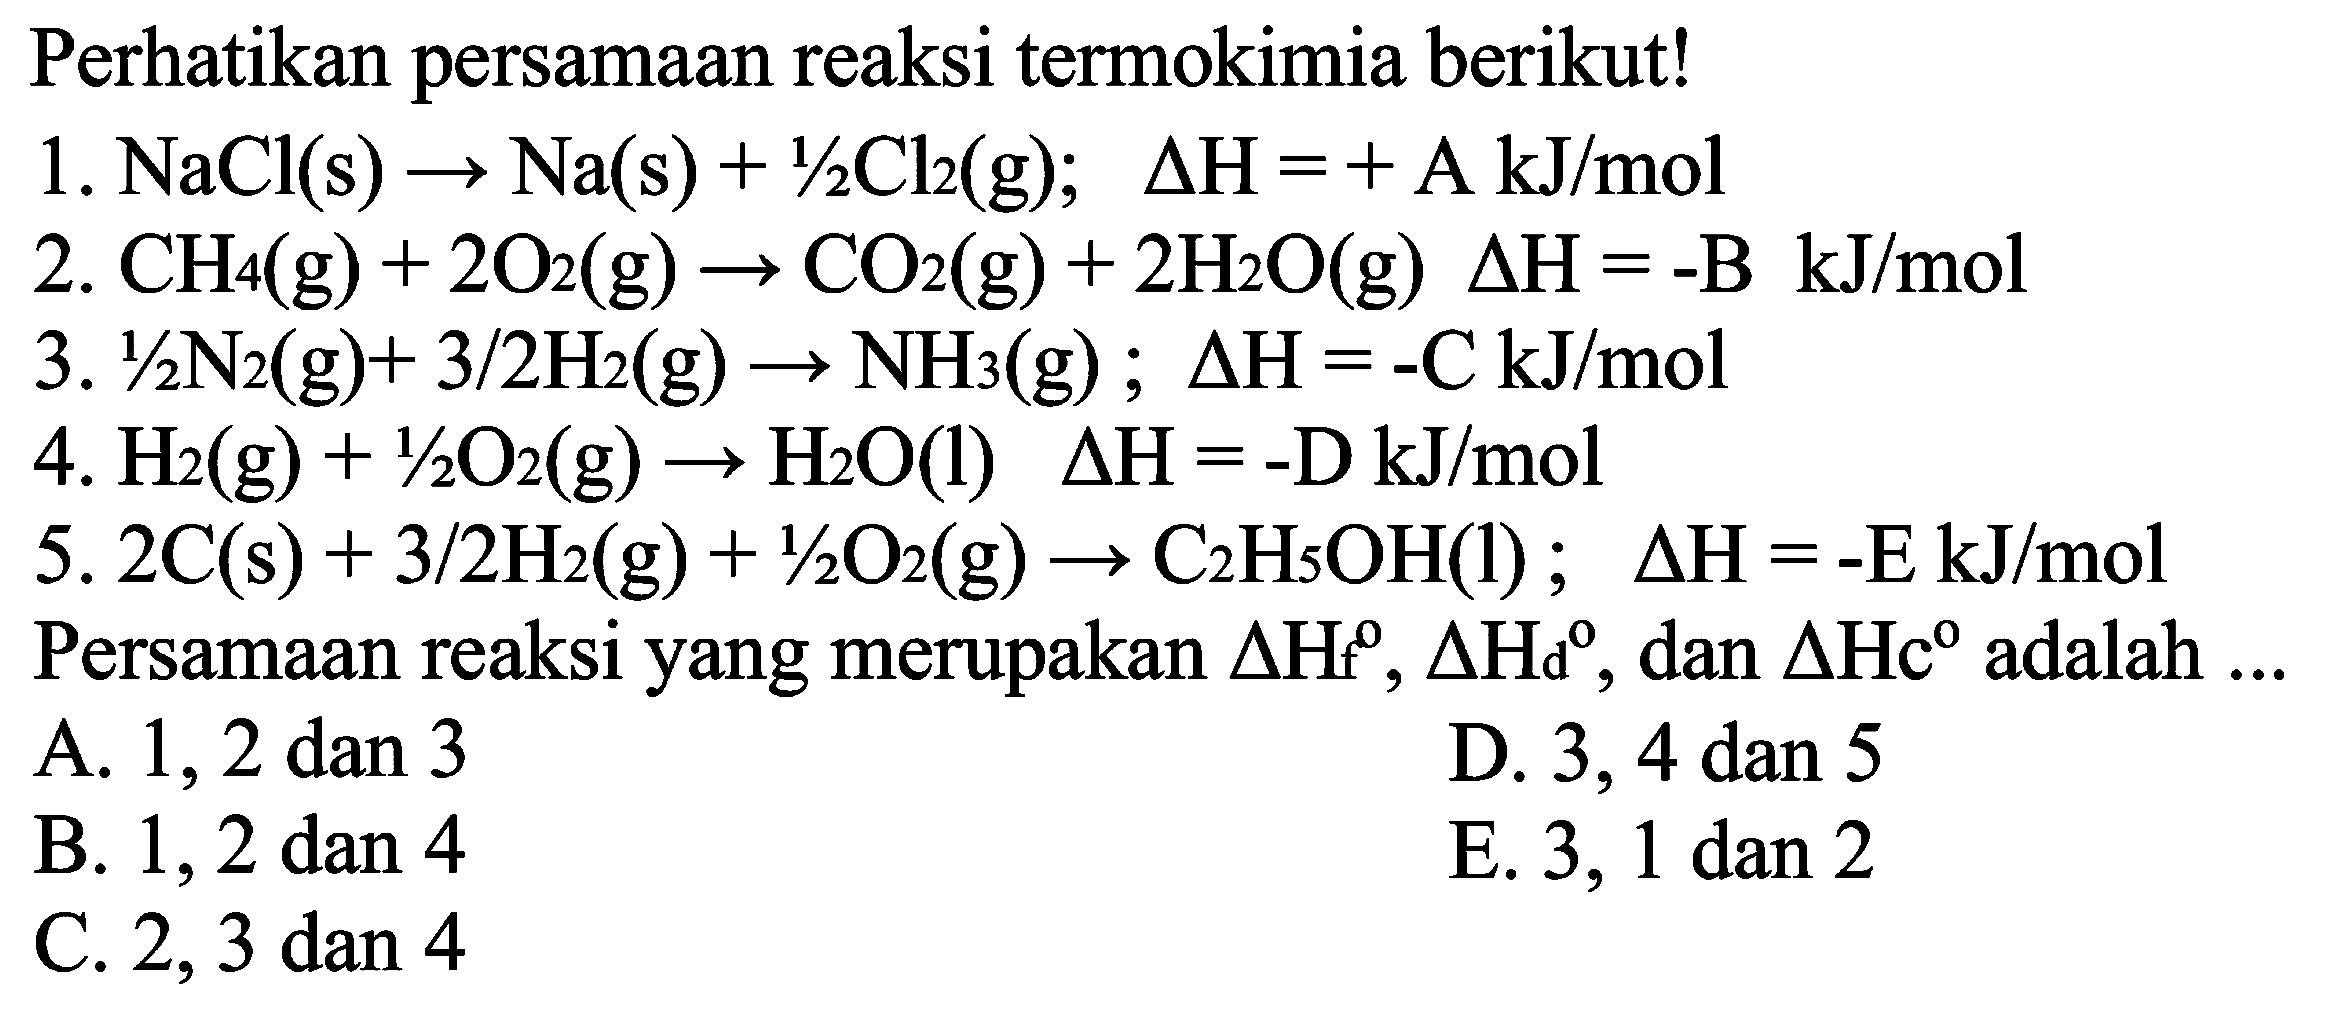 Perhatikan persamaan reaksi termokimia berikut!1. NaCl(s)->Na(s)+1/2Cl2(g); segitiga H=+A kJ/mol 2. CH4(g)+2O2(g)->CO2(g)+2H2O(g); segitiga H=-B kJ/mol 3. 1/2N2(g)+3/2H2(g) -> NH3(g); segitiga H=-C kJ/mol 4. H2(g)+1/2O2(g)->H2O(l); segitiga H=-D kJ/mol 5. 2C(s)+3/2H2(g)+1/2O2(g)->C2H5OH(l); segitiga H=-E kJ/mol Persamaan reaksi yang merupakan segitiga Hf^o, segitiga Hd^o, dan segitiga Hc^o adalah ...